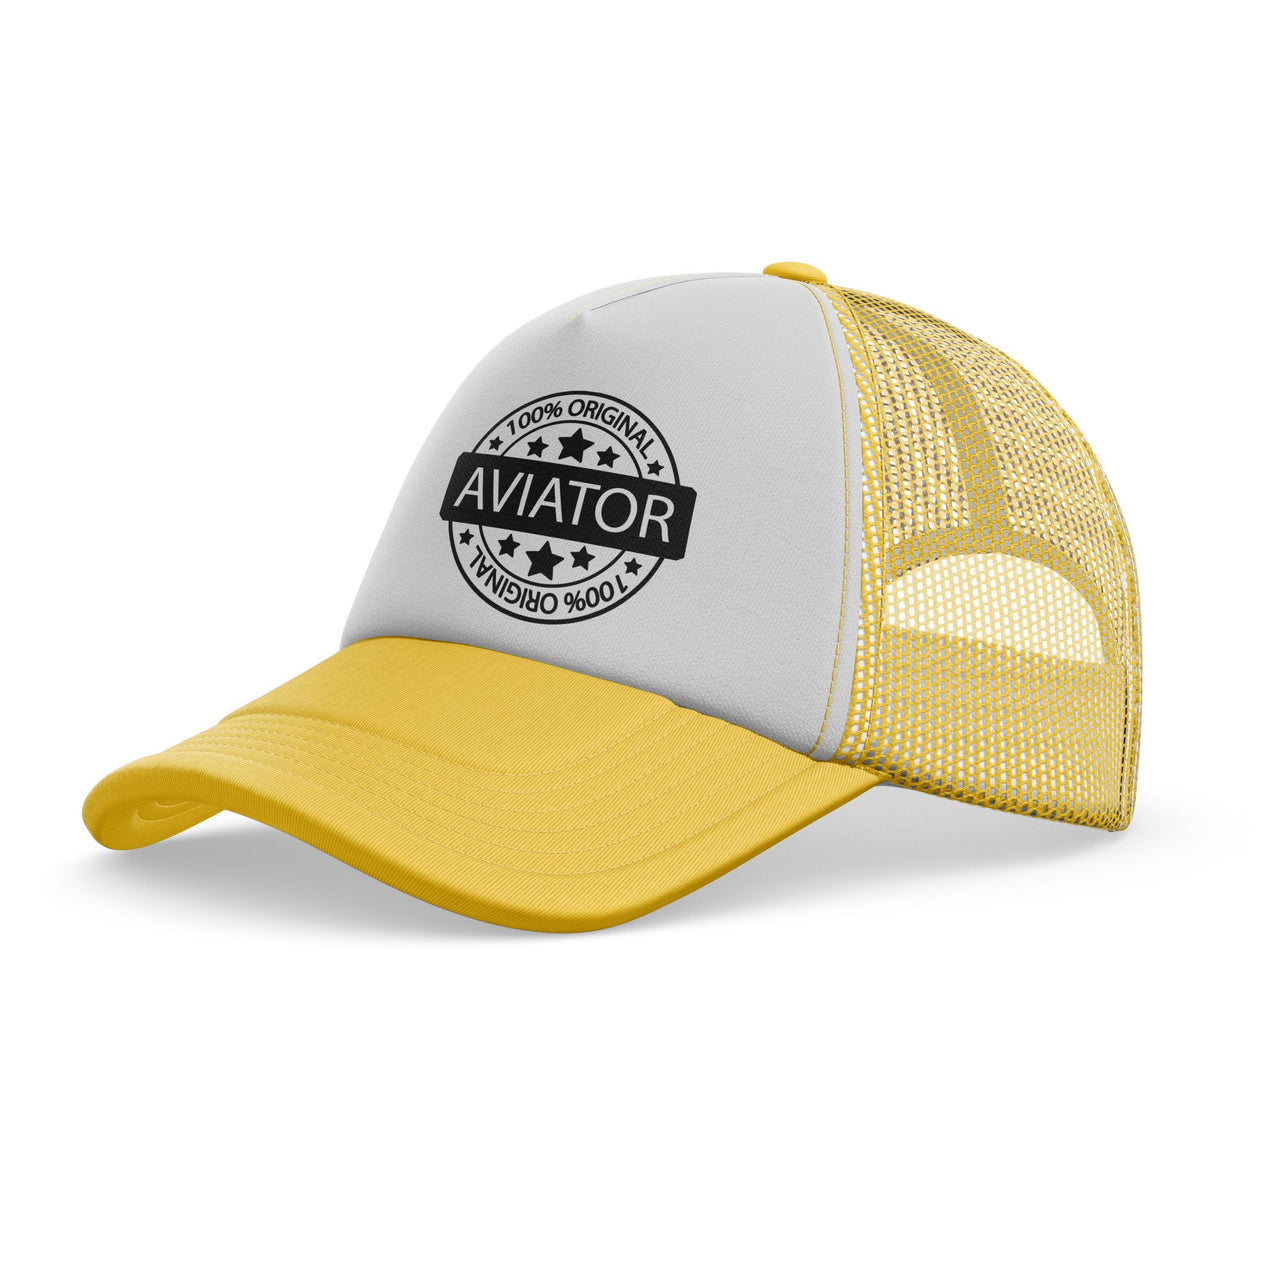 100 Original Aviator Designed Trucker Caps & Hats